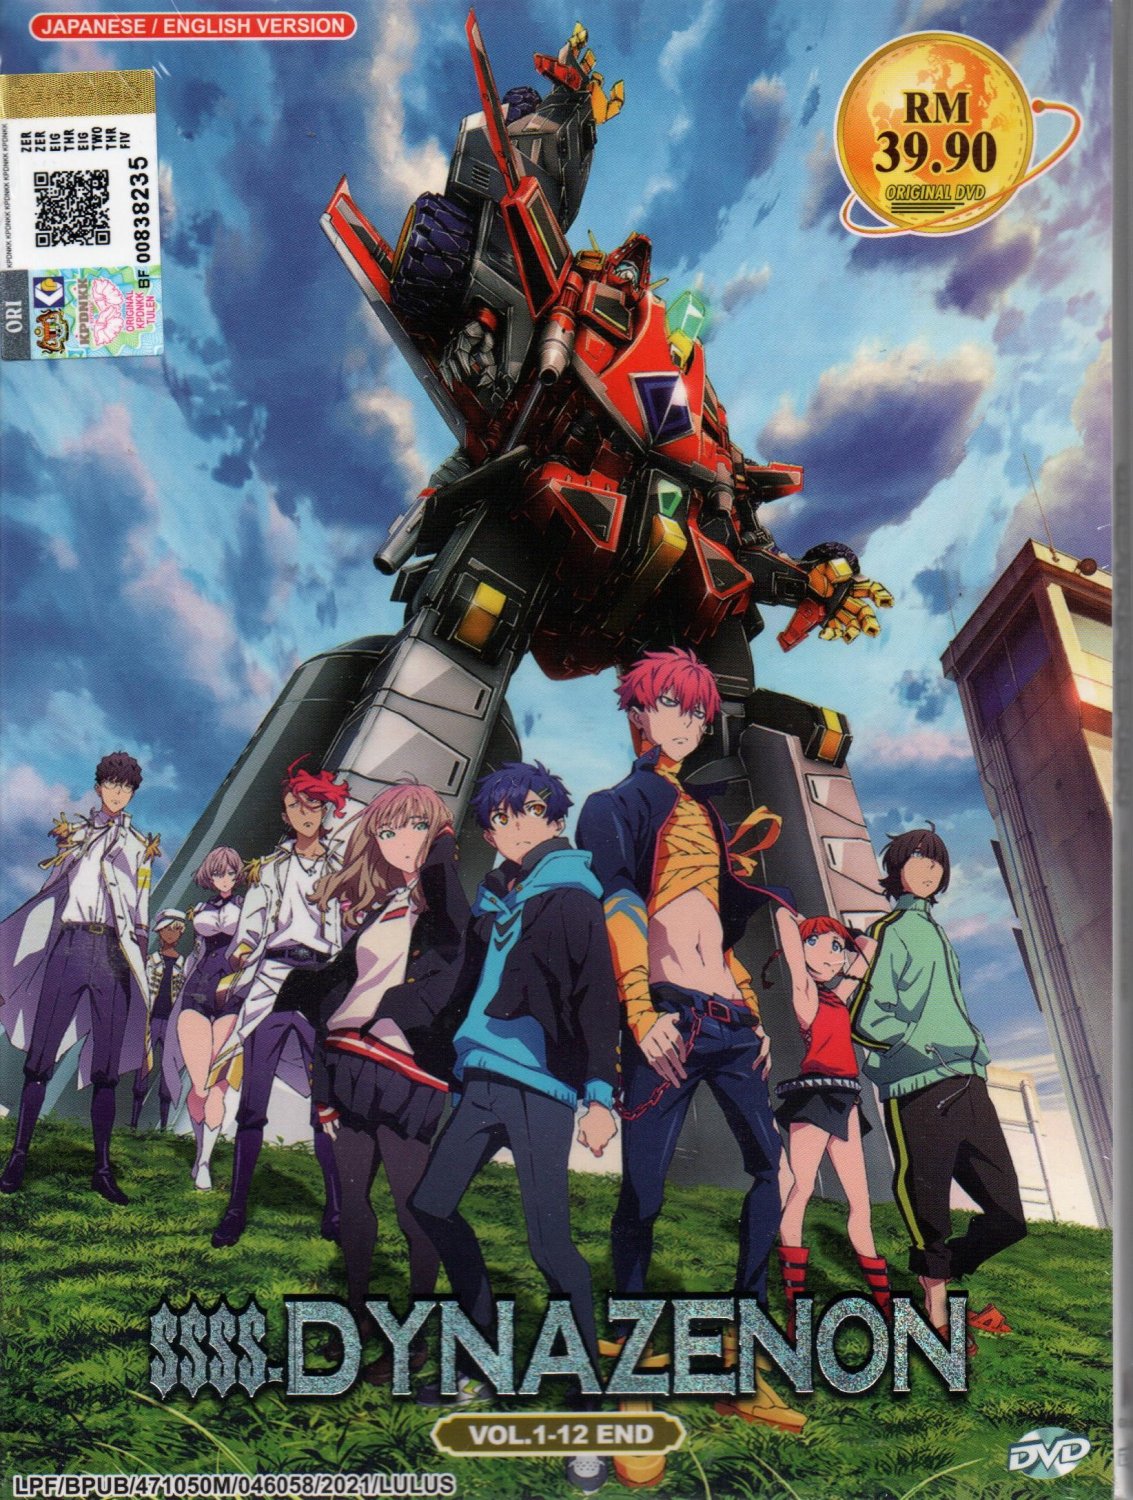 Anime DVD SSSS.Dynazenon Vol.1-12 End English Dubbed